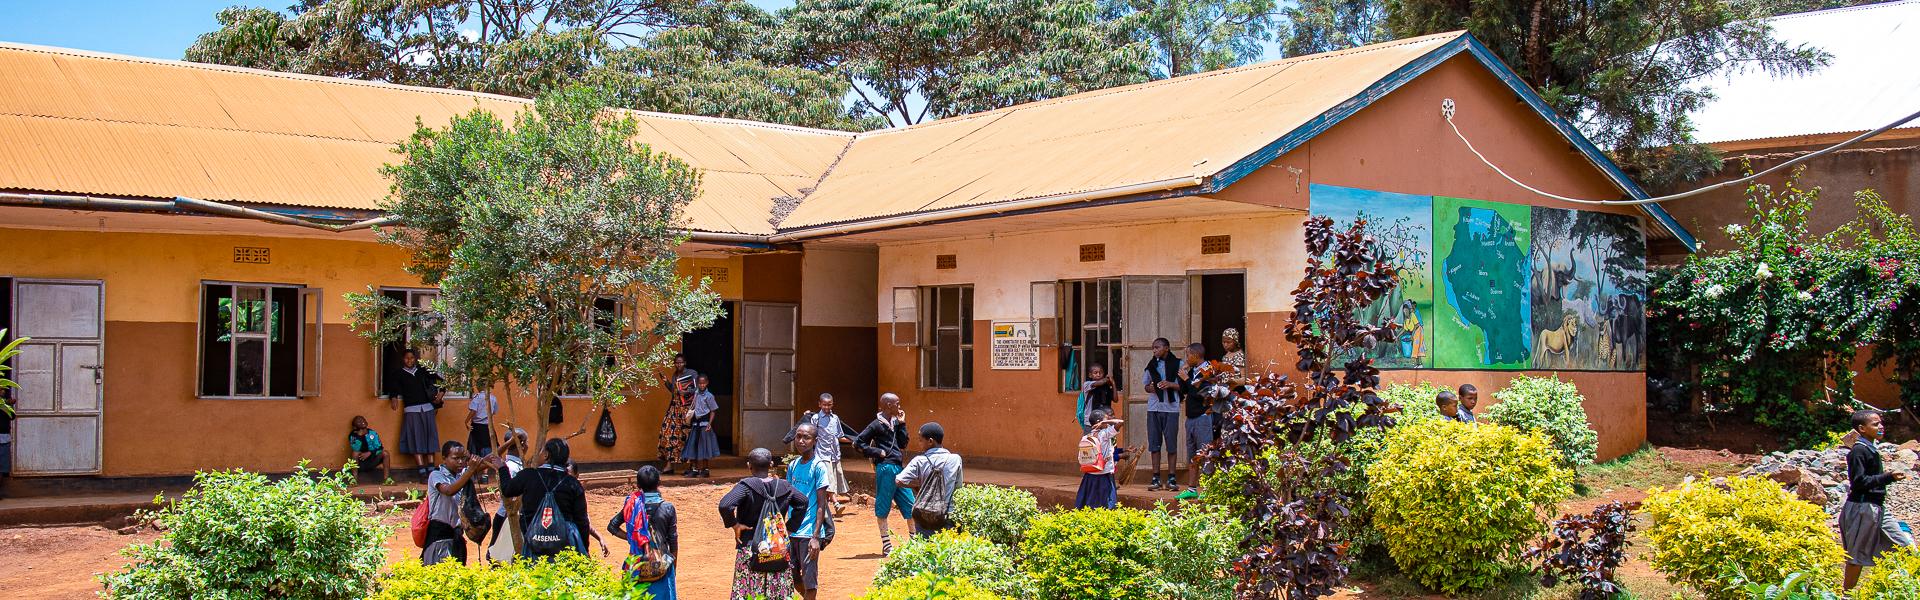 Mwema Street Children Center |  Stephan Auner / Chamleon